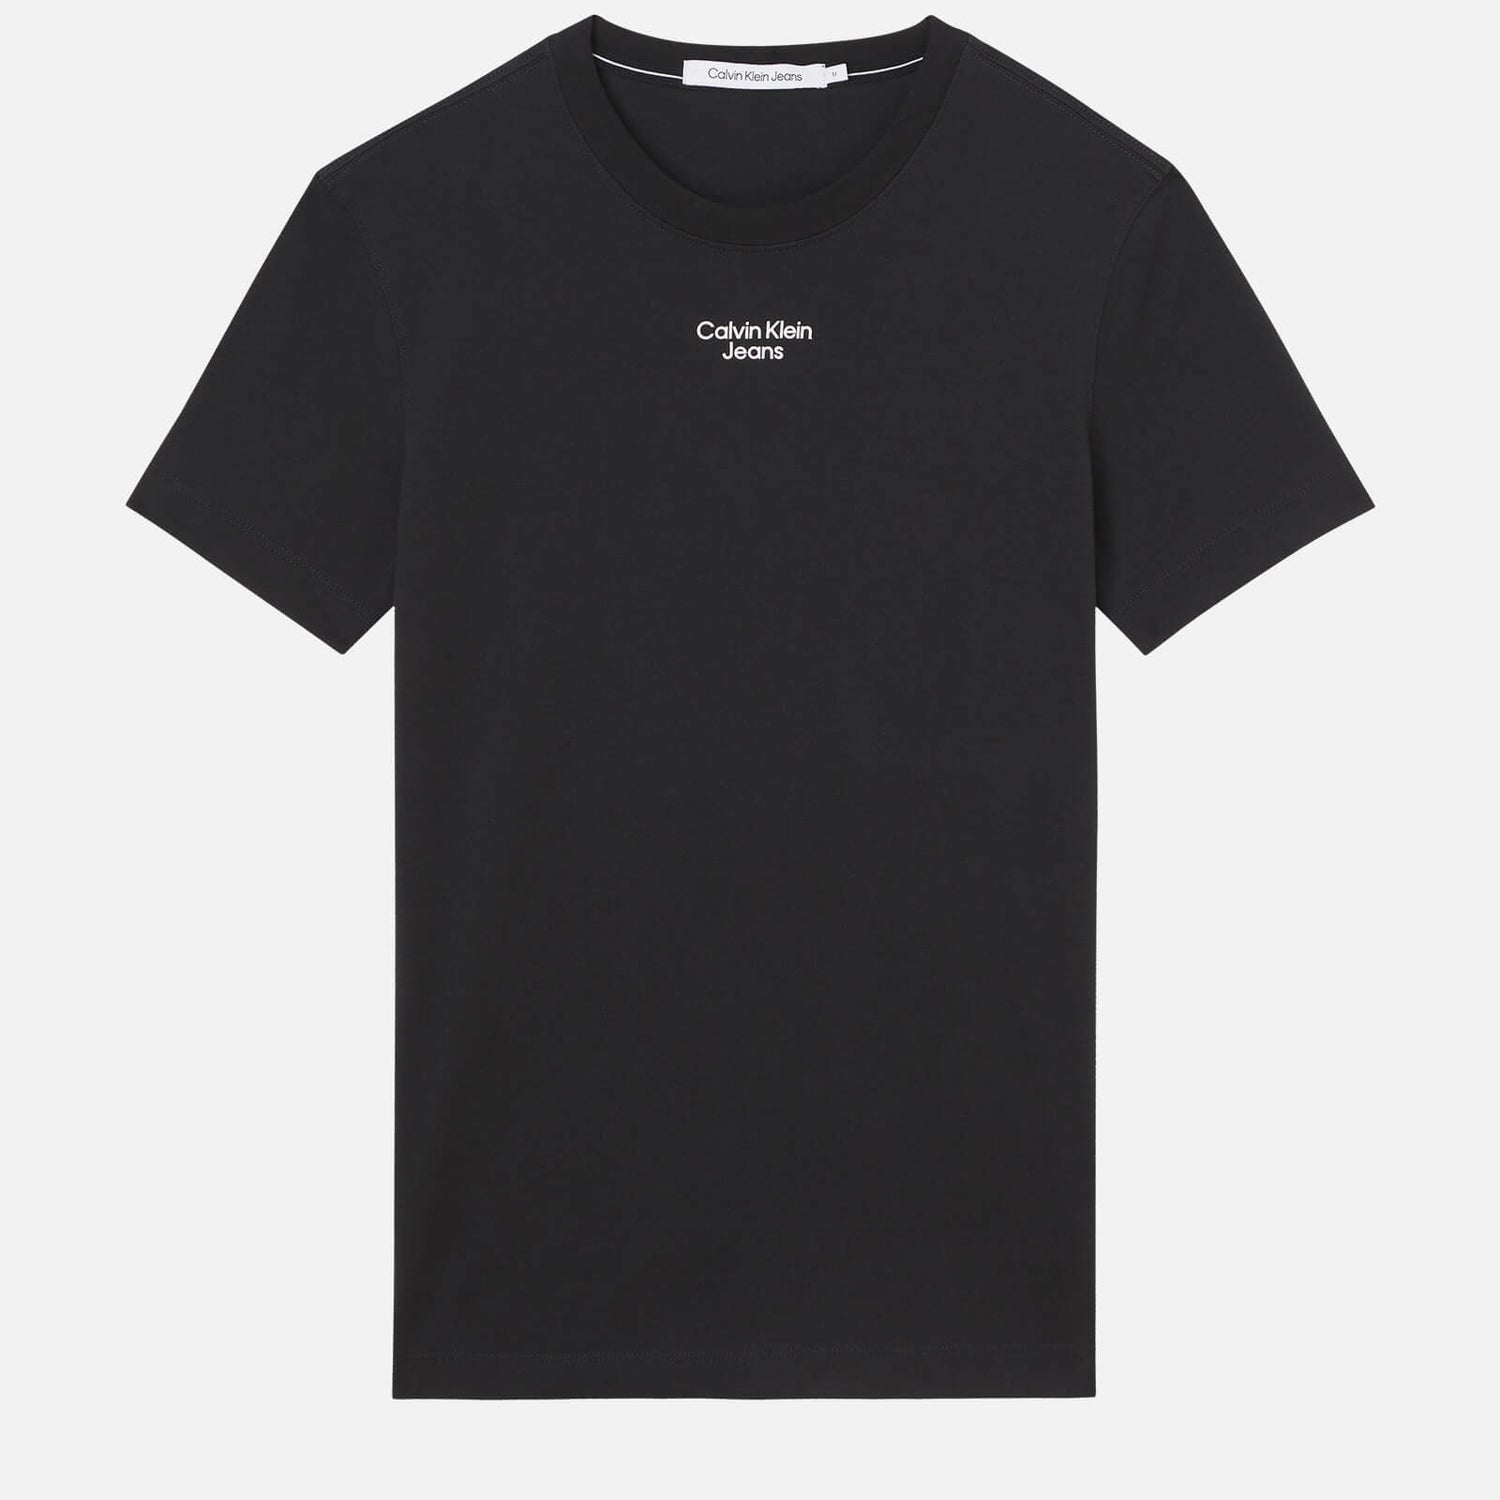 Calvin Klein Jeans Men's Stacked Logo T-Shirt - Black - S